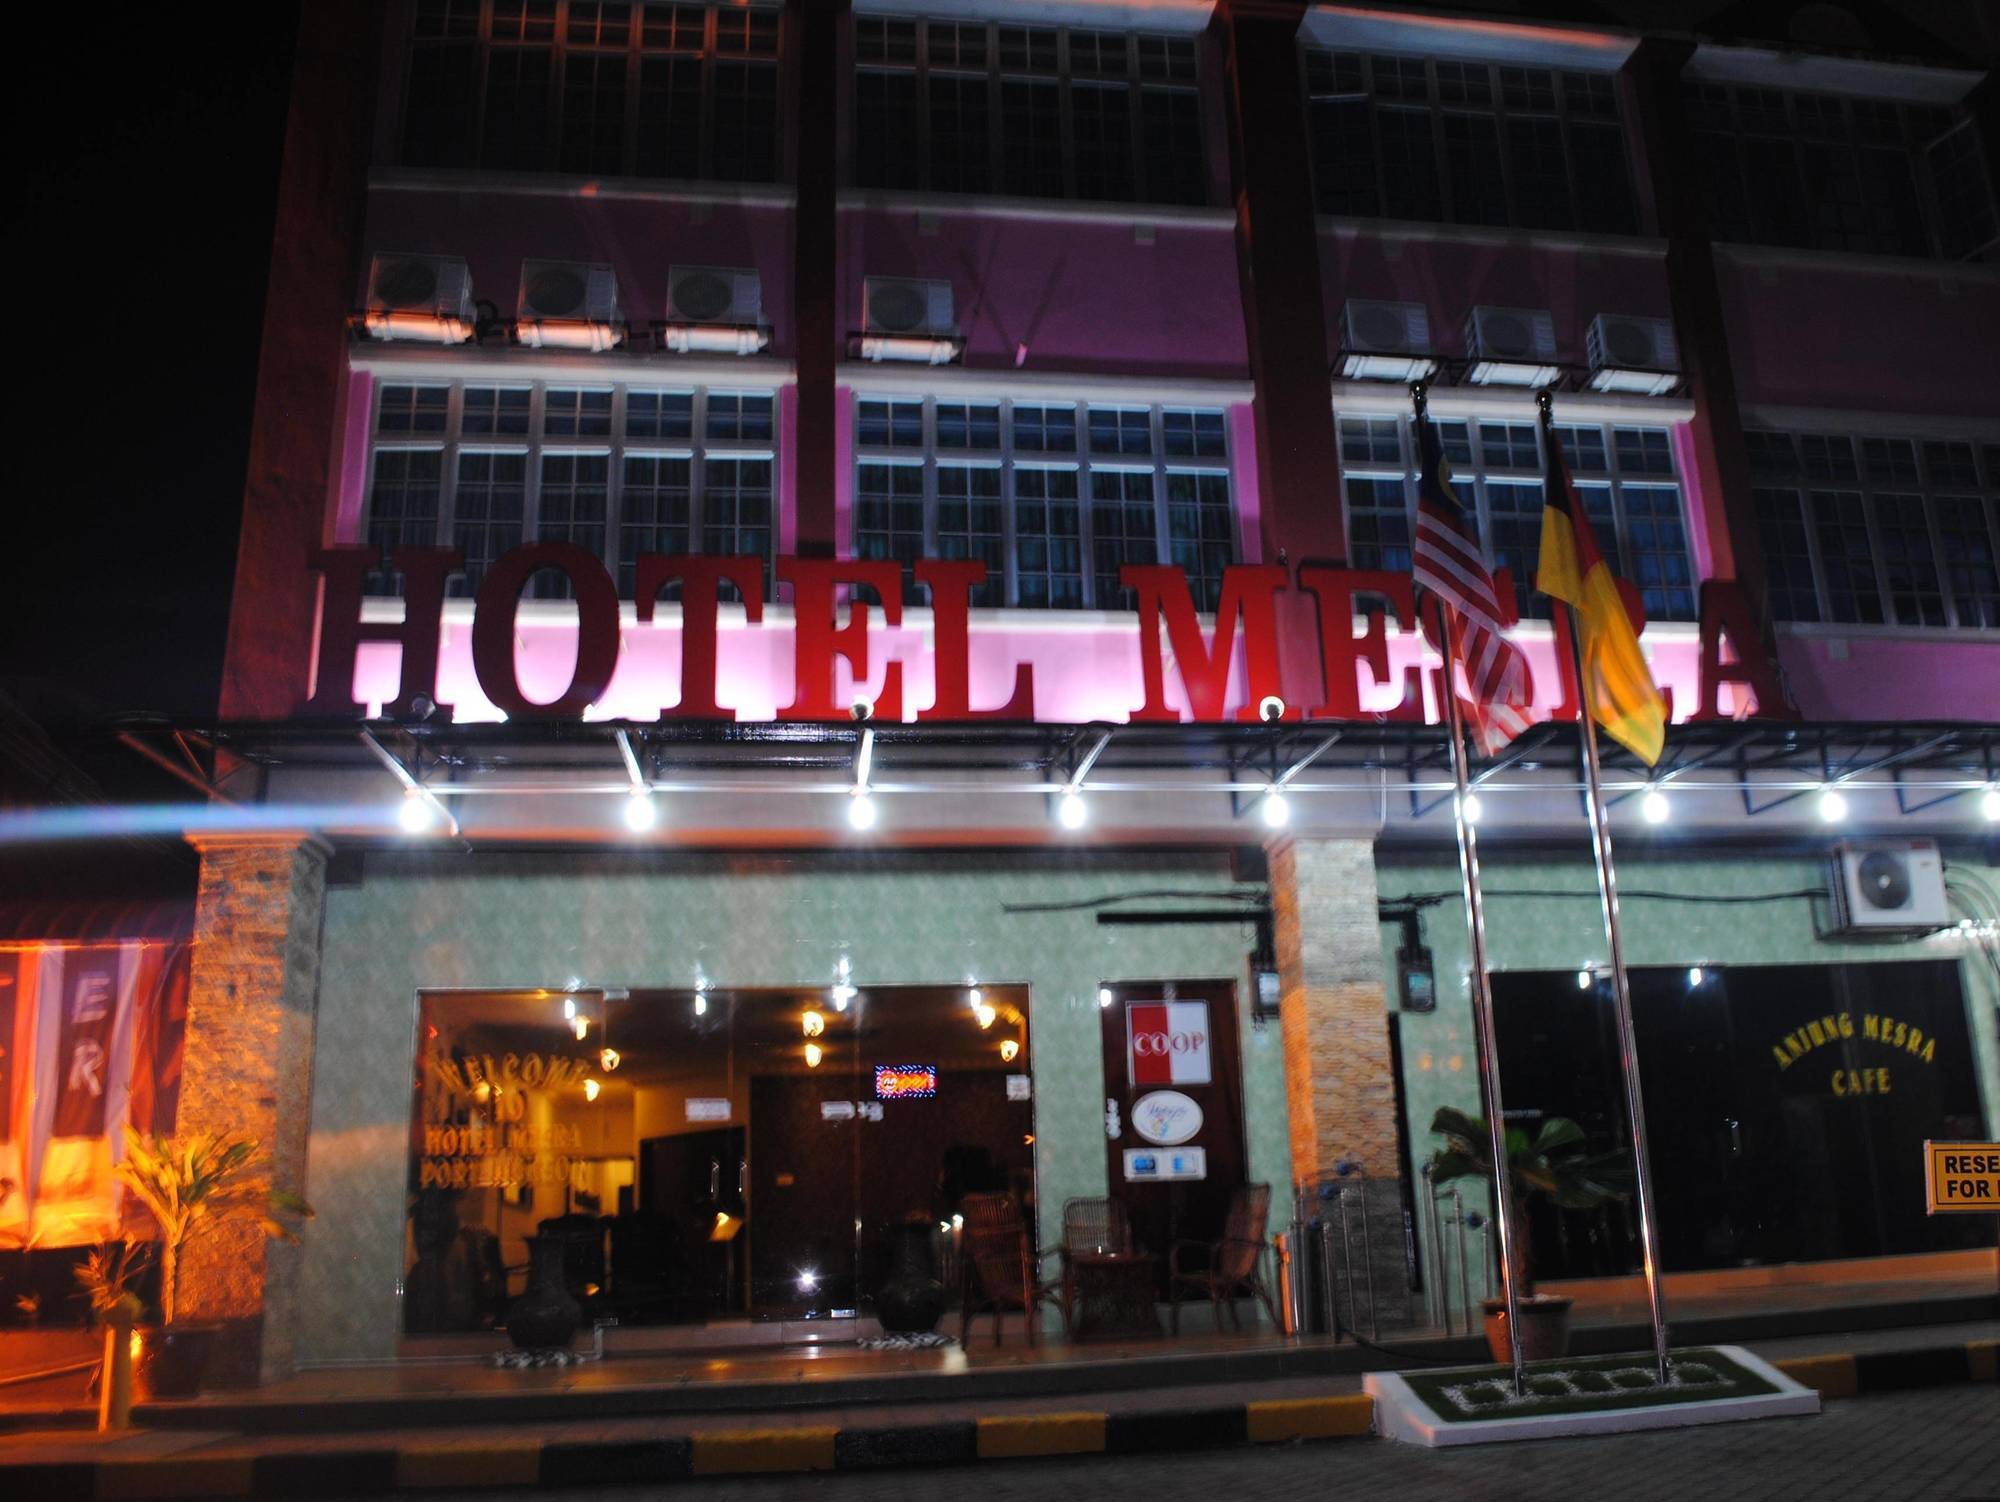 Hotel Mesra Port Dickson Exterior photo